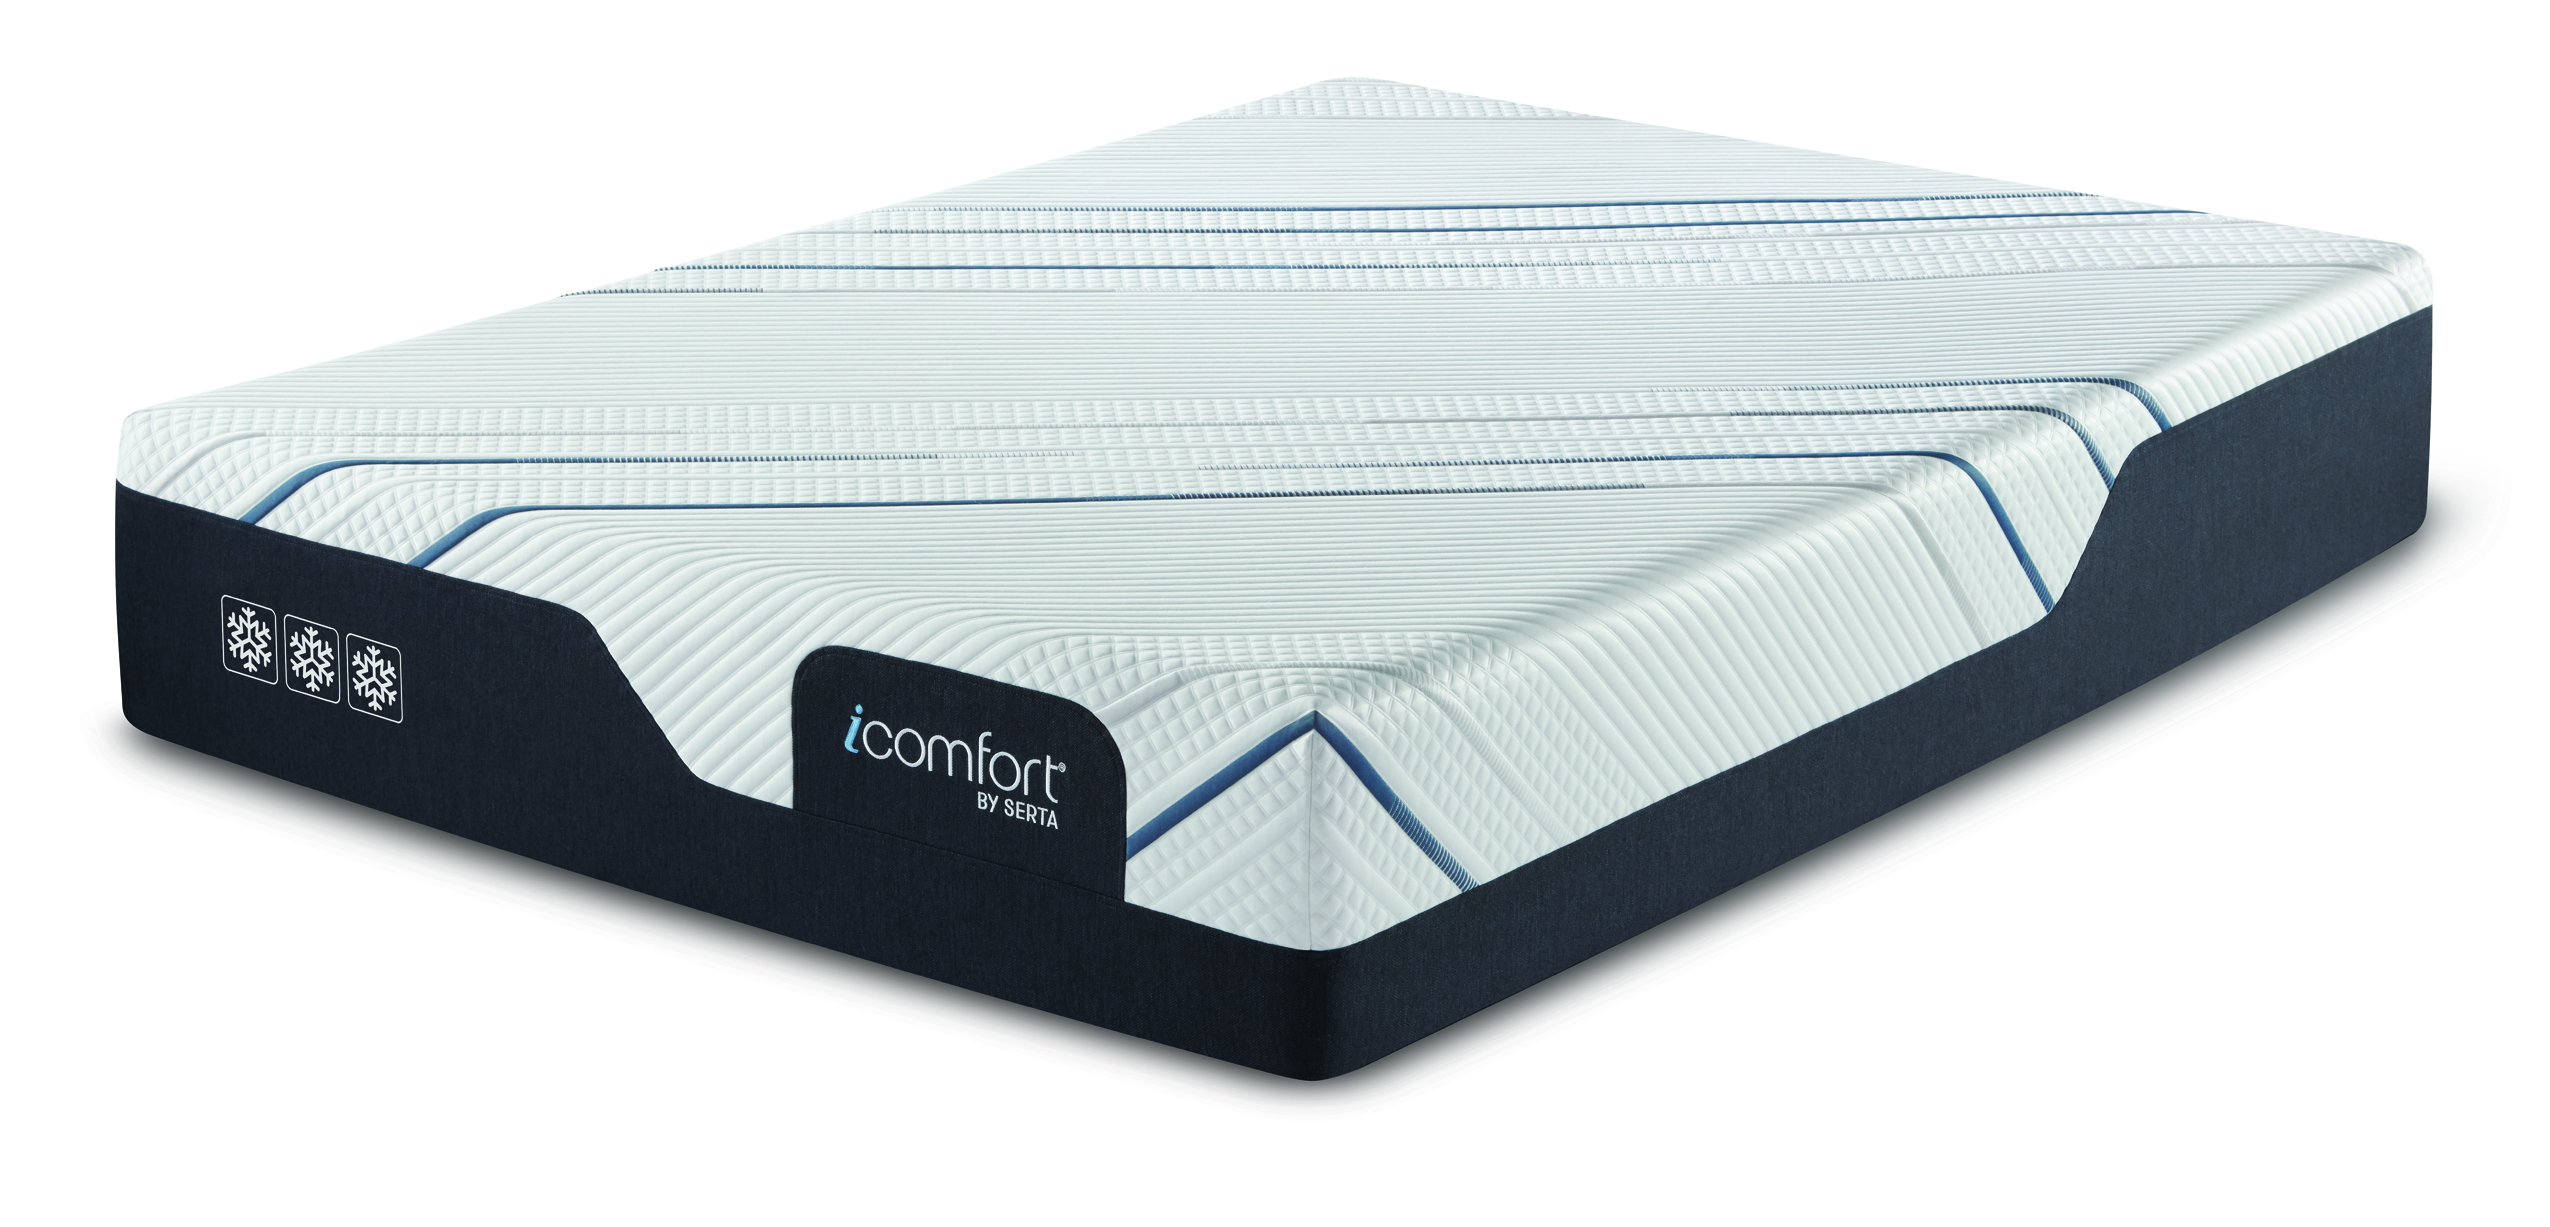 icomfort king mattress cover